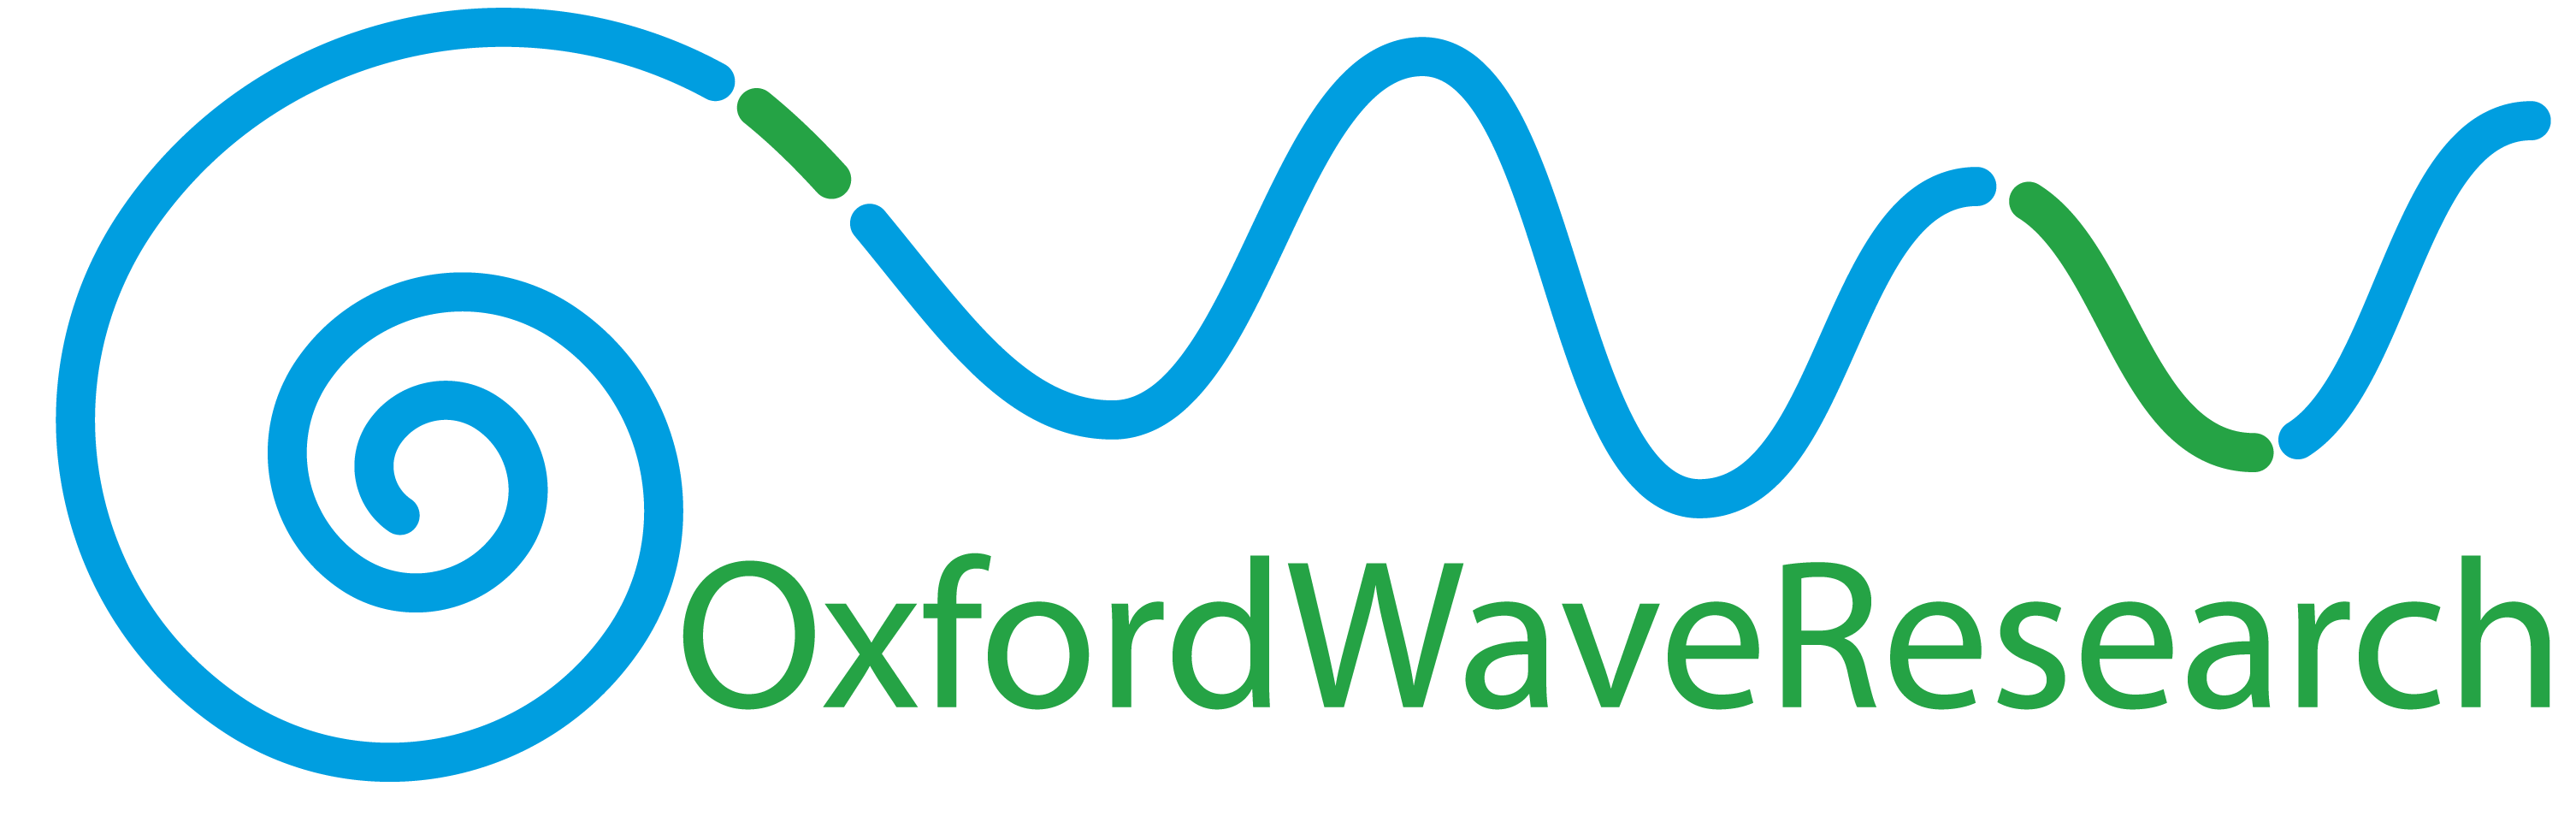 Oxford Wave Research logo